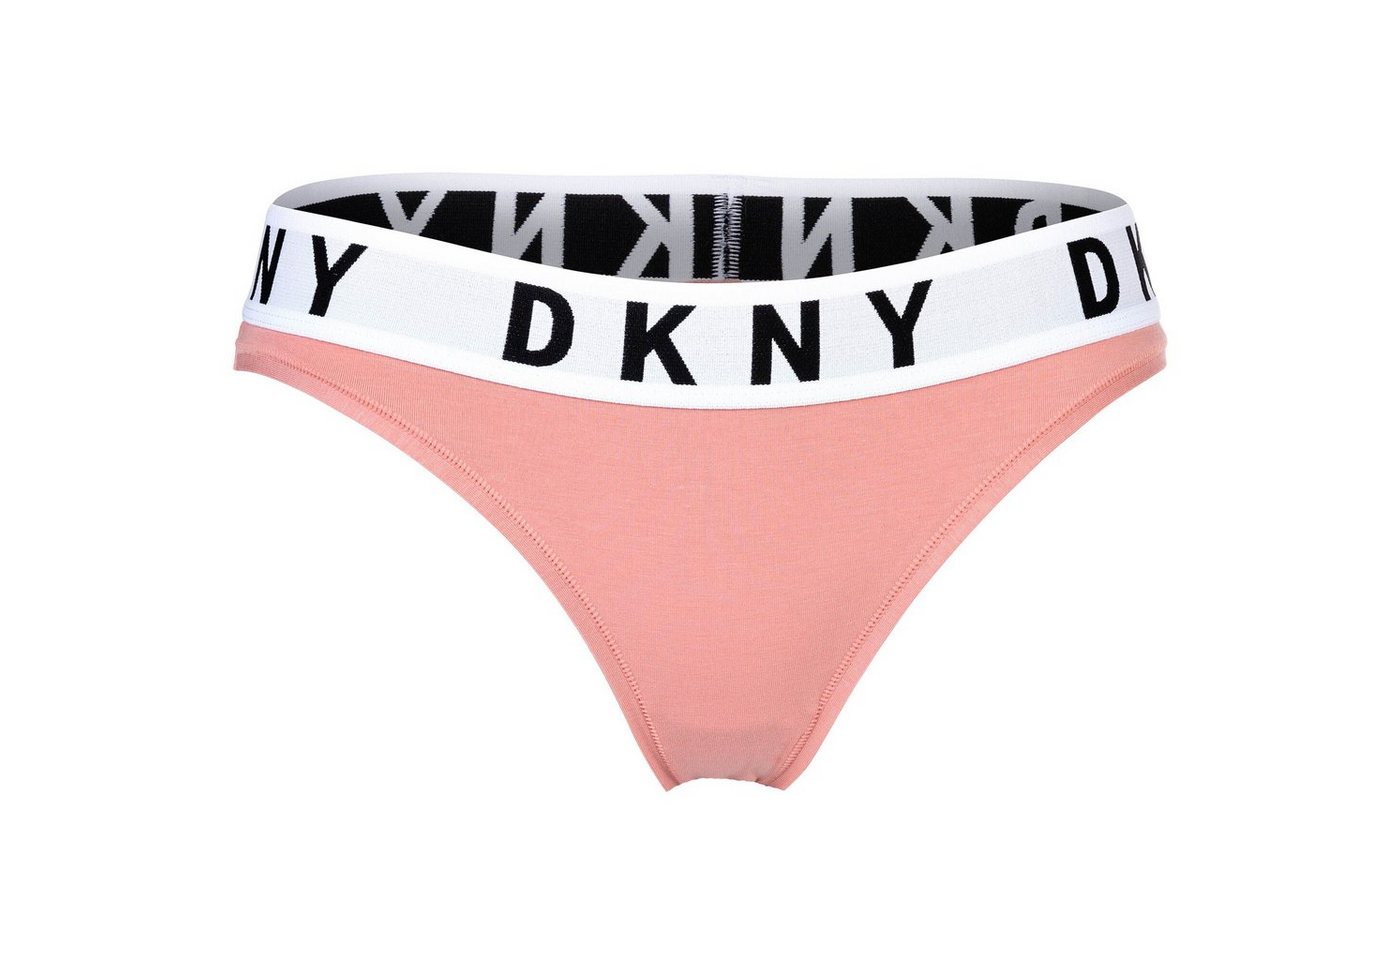 DKNY Panty Damen Slip - Brief, Cotton Modal Stretch von DKNY